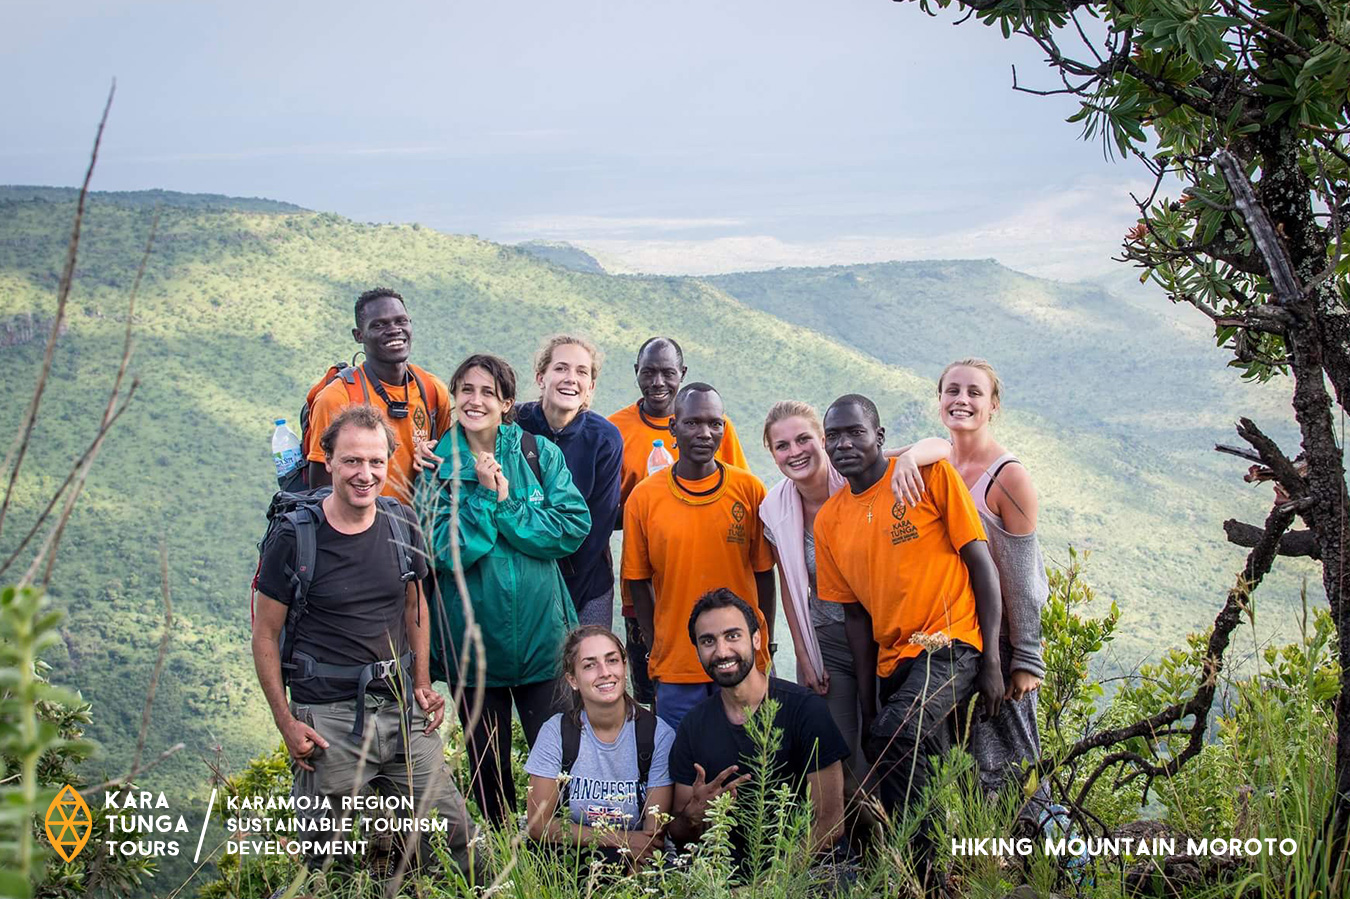 kara-tunga-karamoja-uganda-tours-hiking-trekking-mountain-moroto